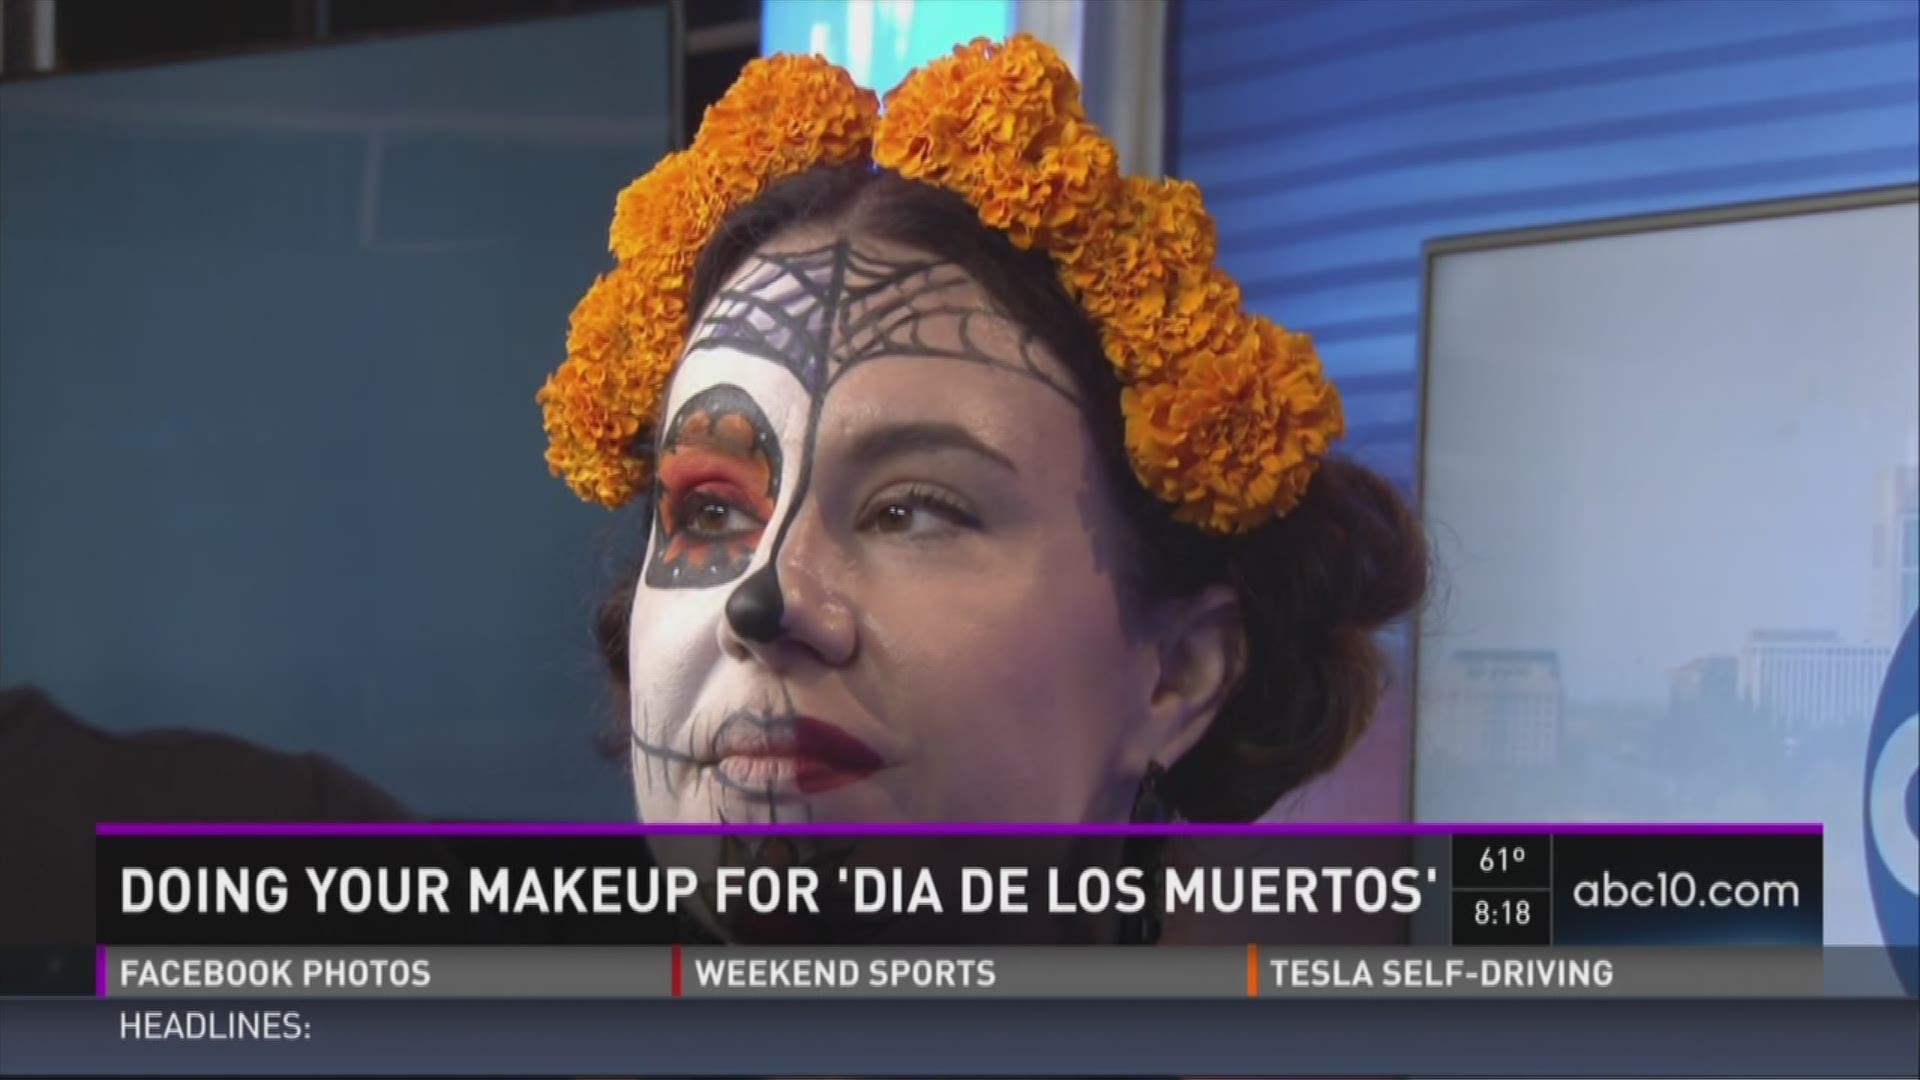 Local makeup artist Alex Cassie demonstrates how you can do your skull makeup for Dia de los Muertos